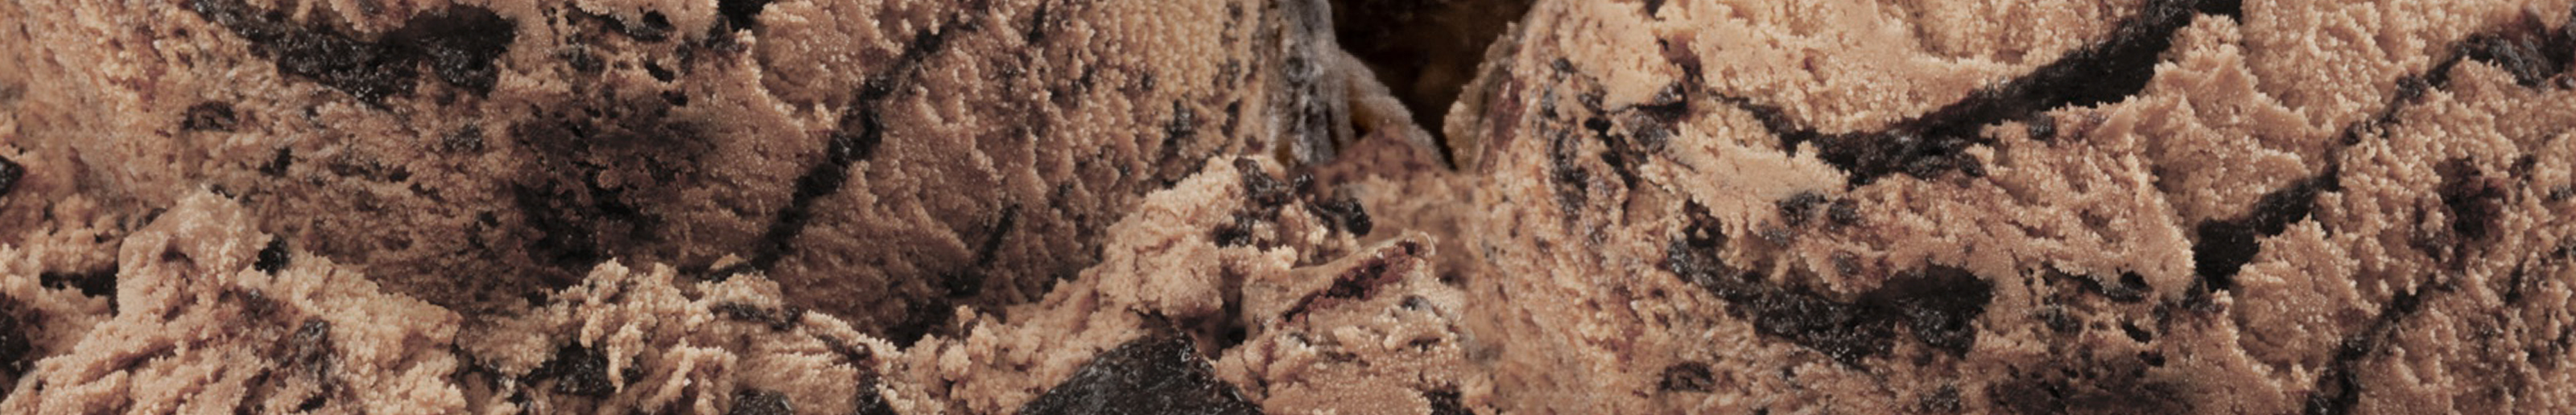 Brigham's Chocolate Avalanche Ice Cream